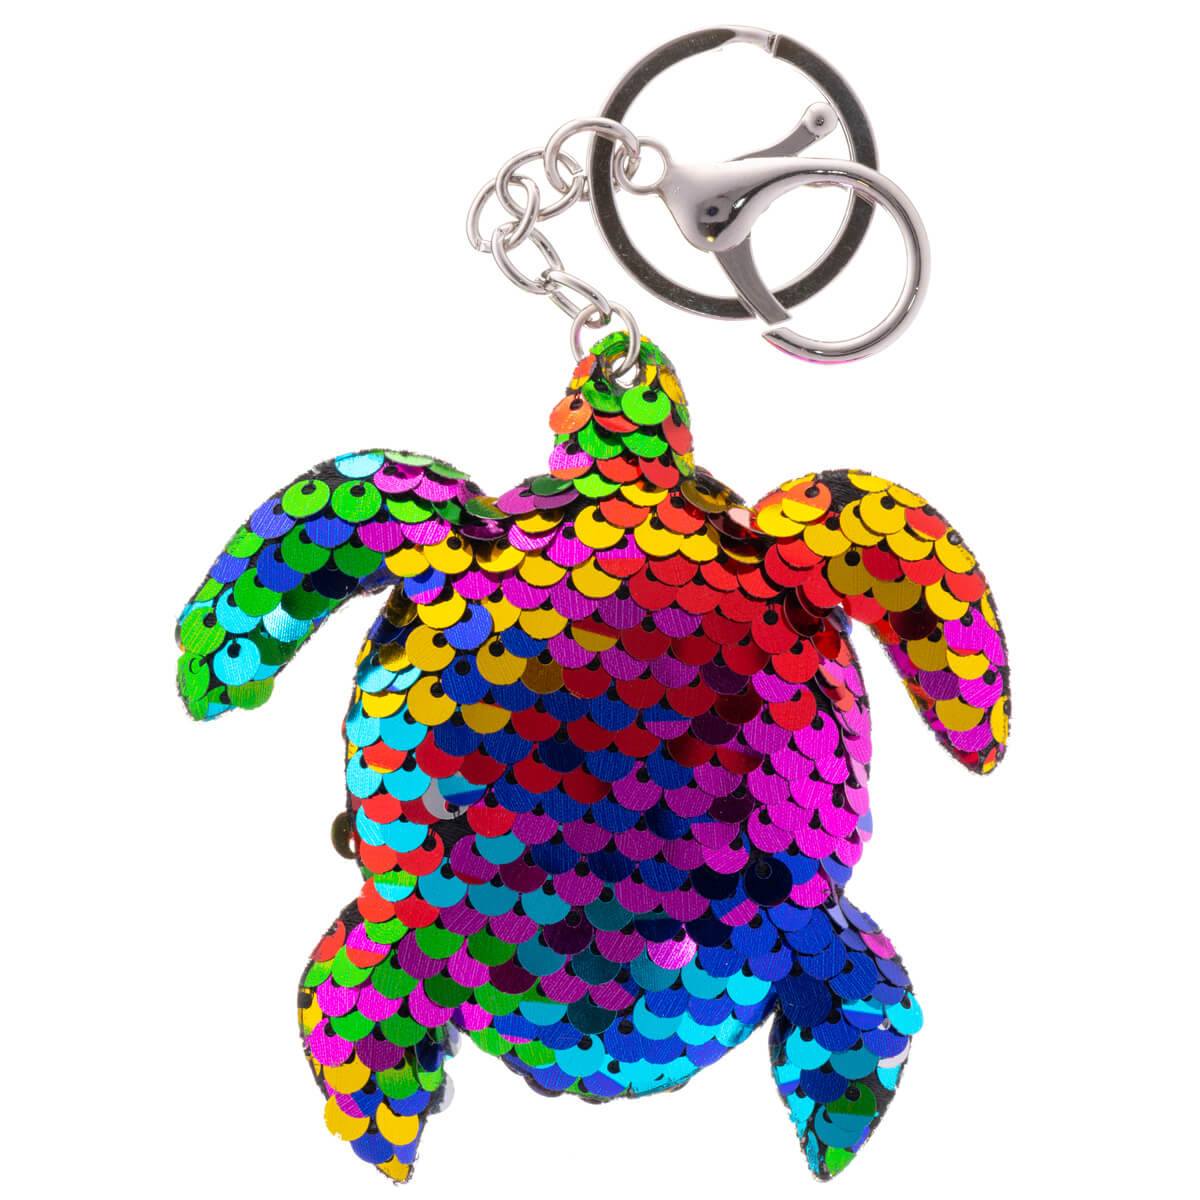 Sequin tortoise keychain